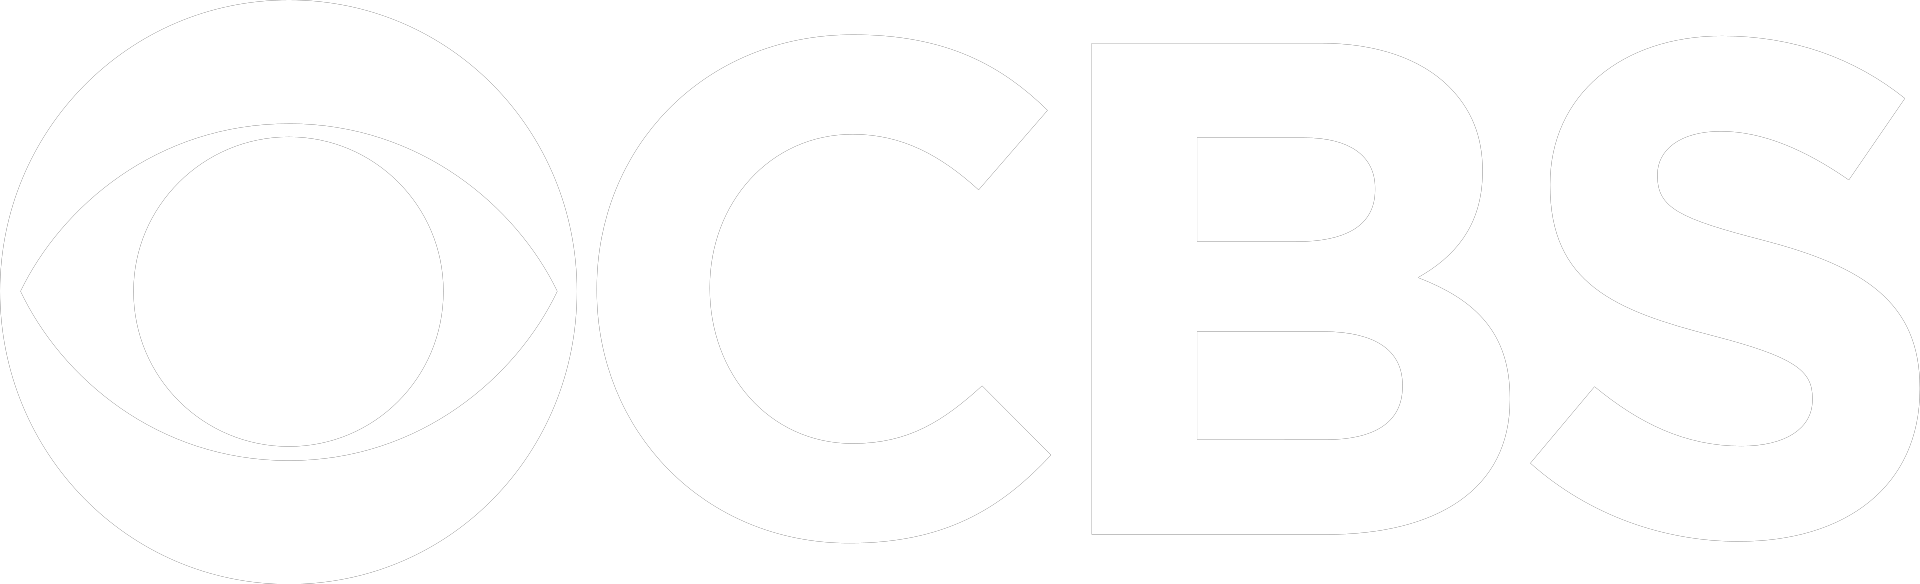 CBS_Logo_white